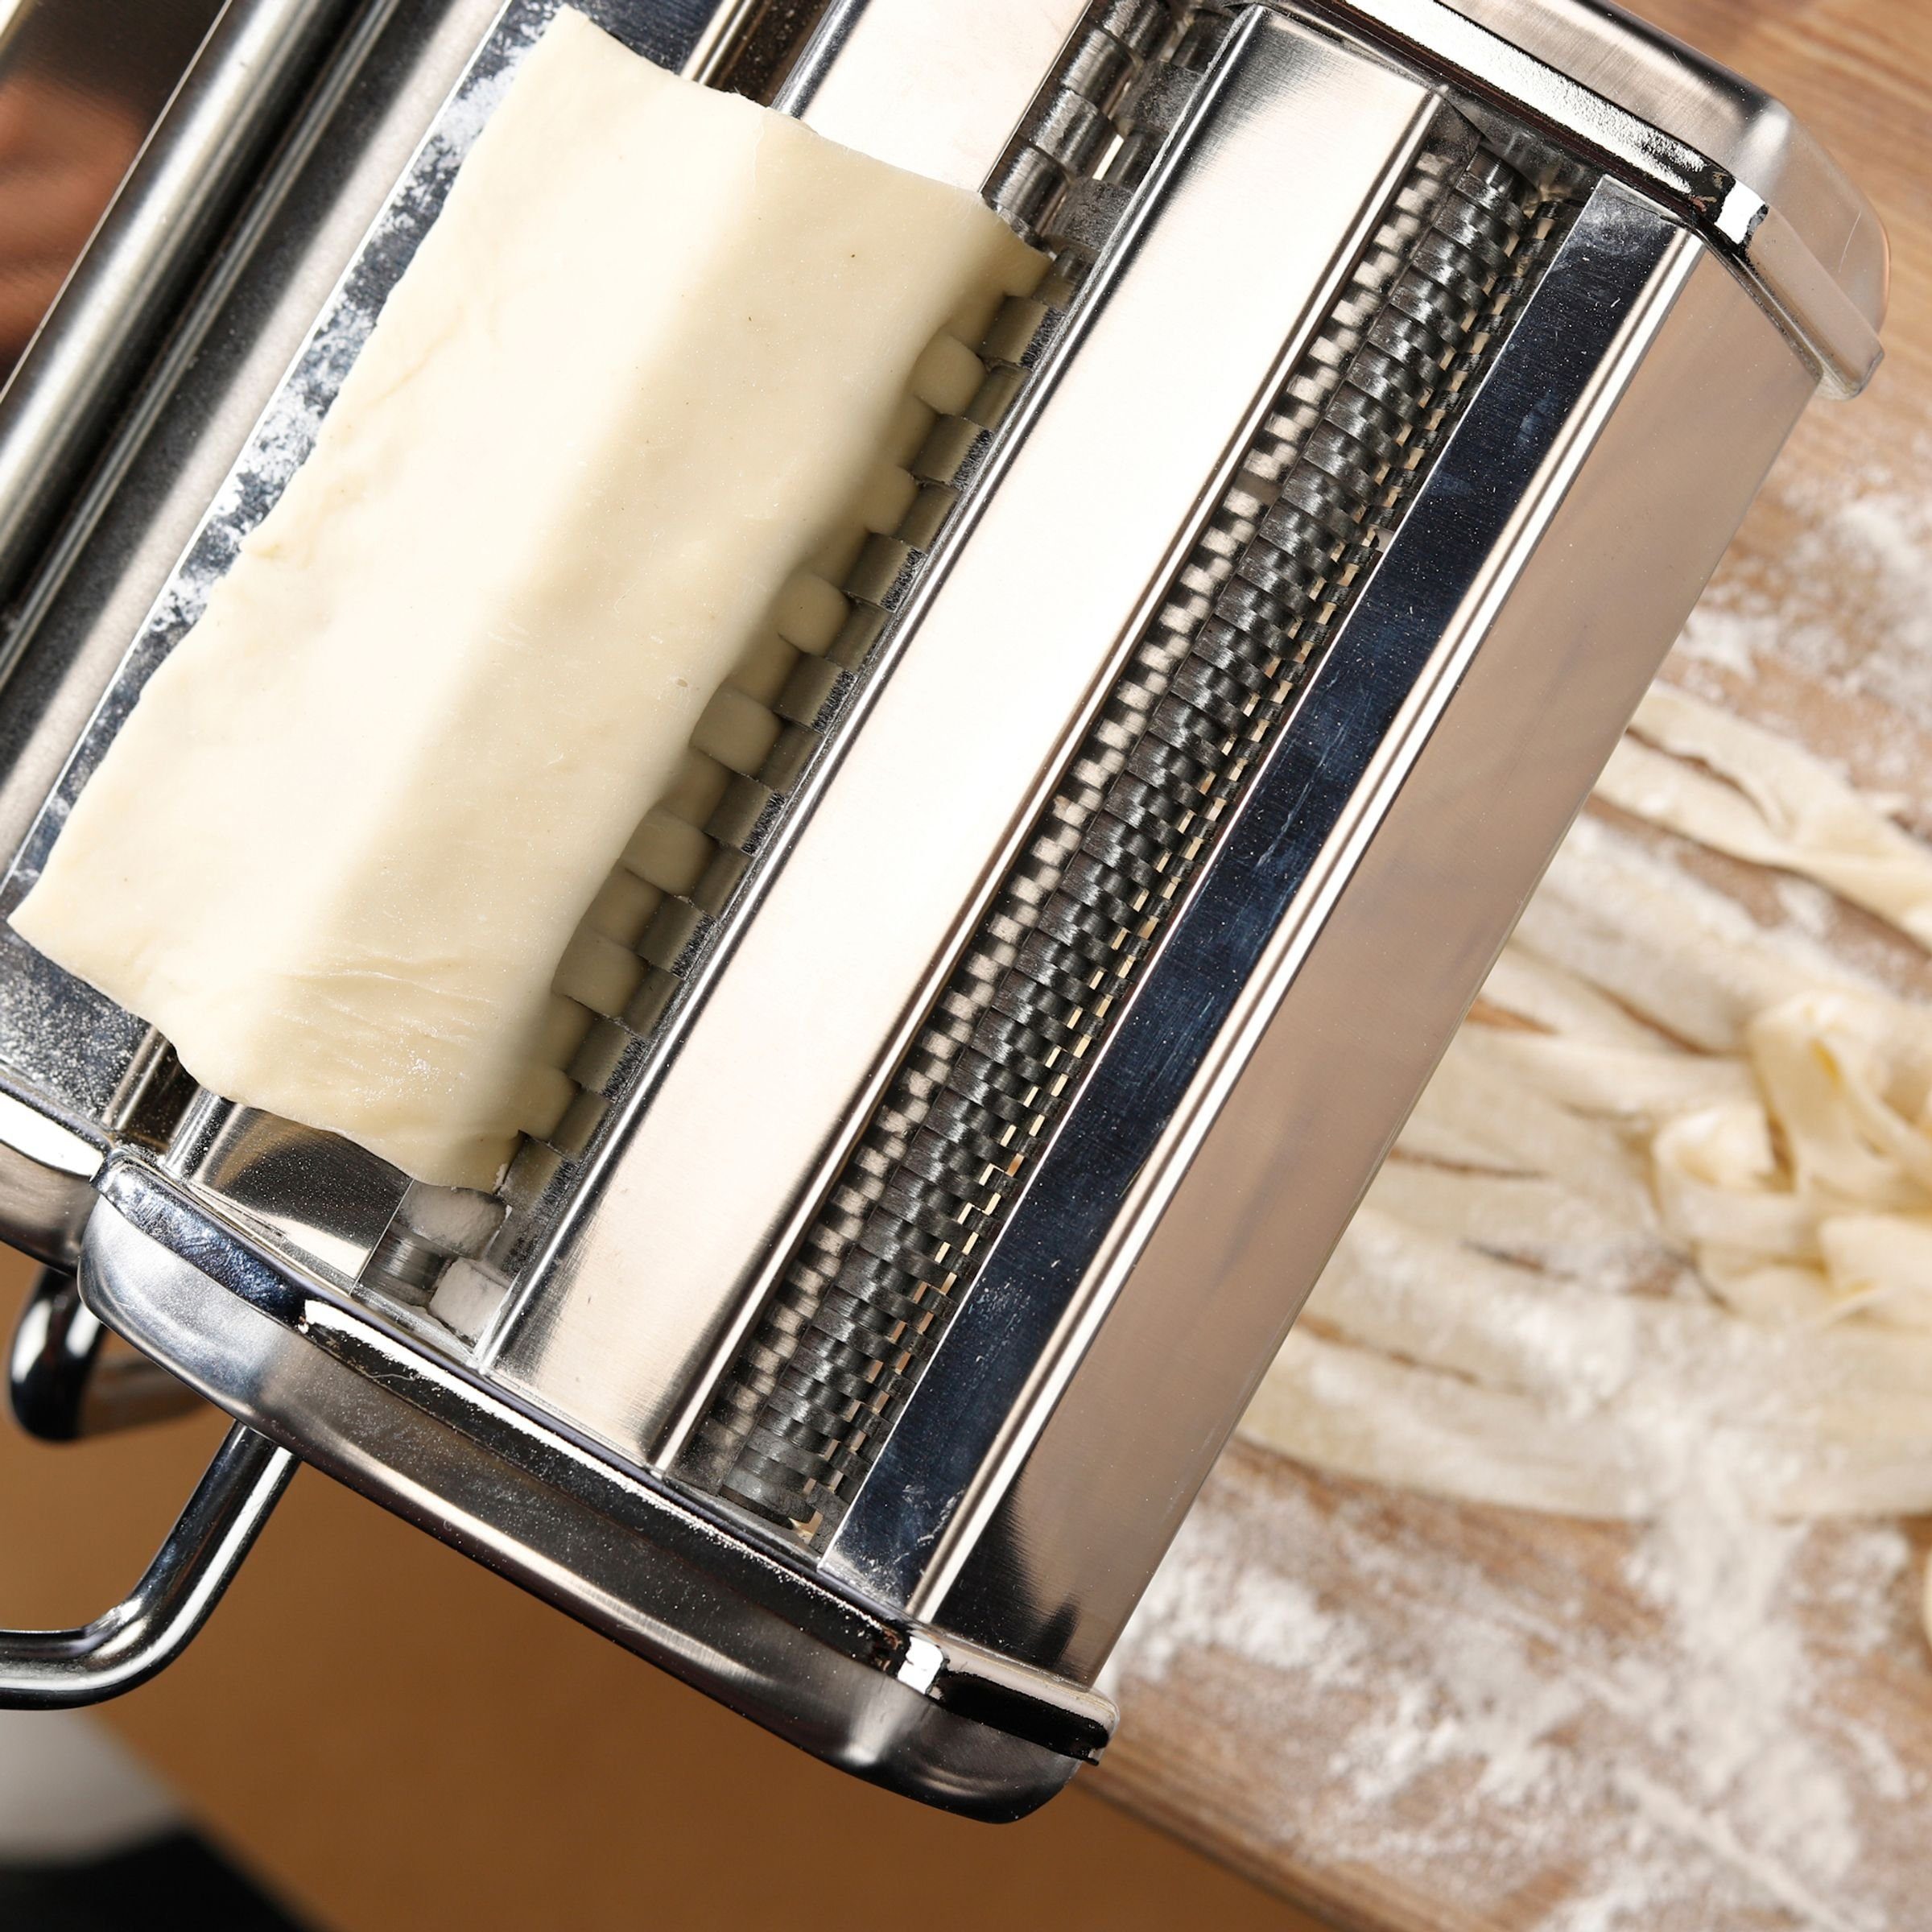 Gravidus Nudelmaschine Edelstahl Maschine Pasta Tagliatelle Nudelmaschine